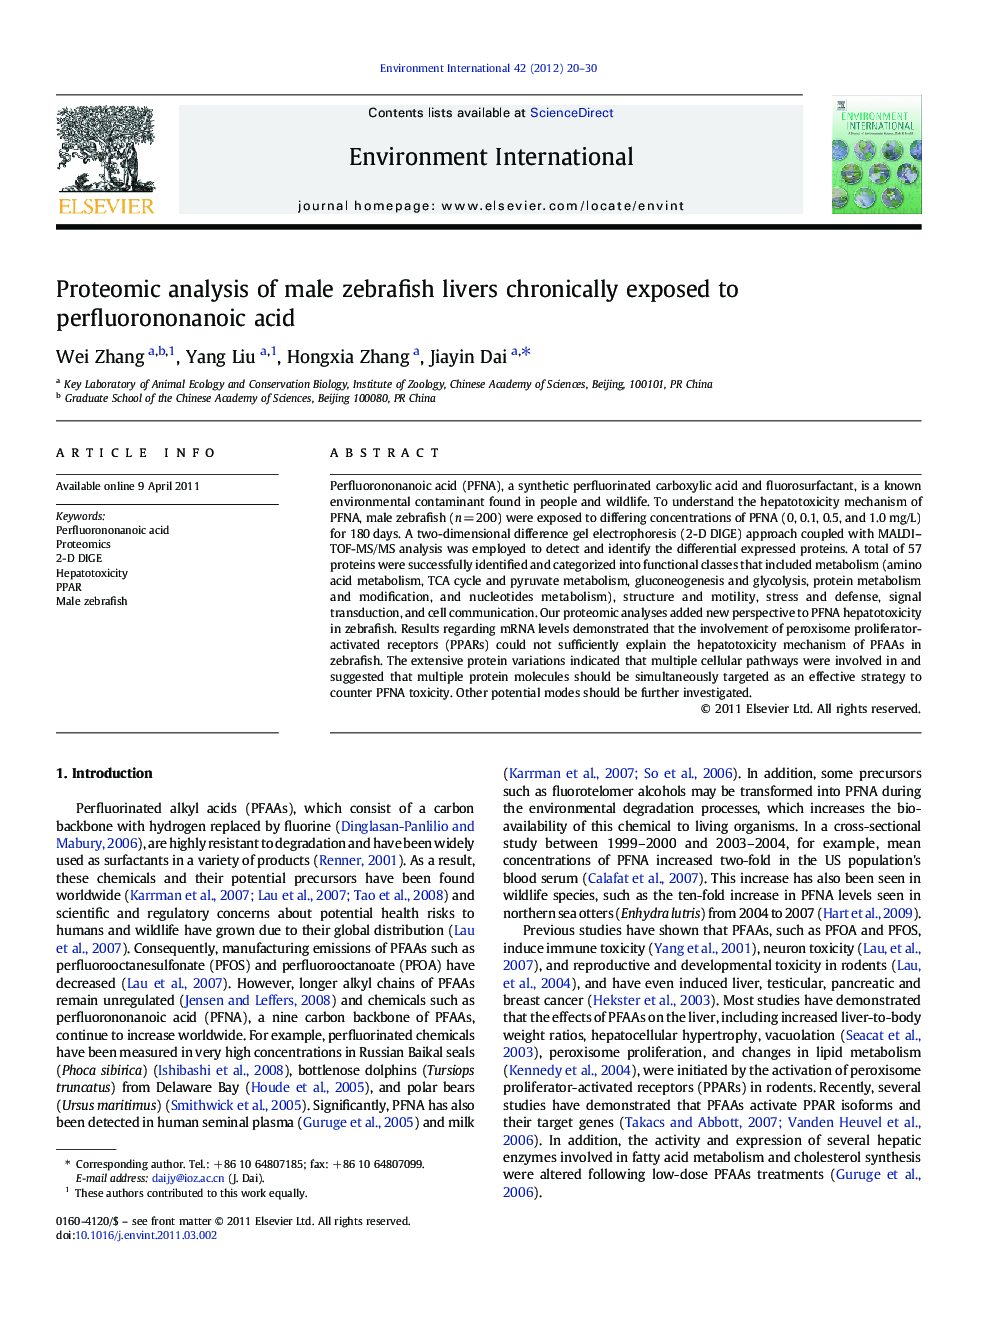 Proteomic analysis of male zebrafish livers chronically exposed to perfluorononanoic acid